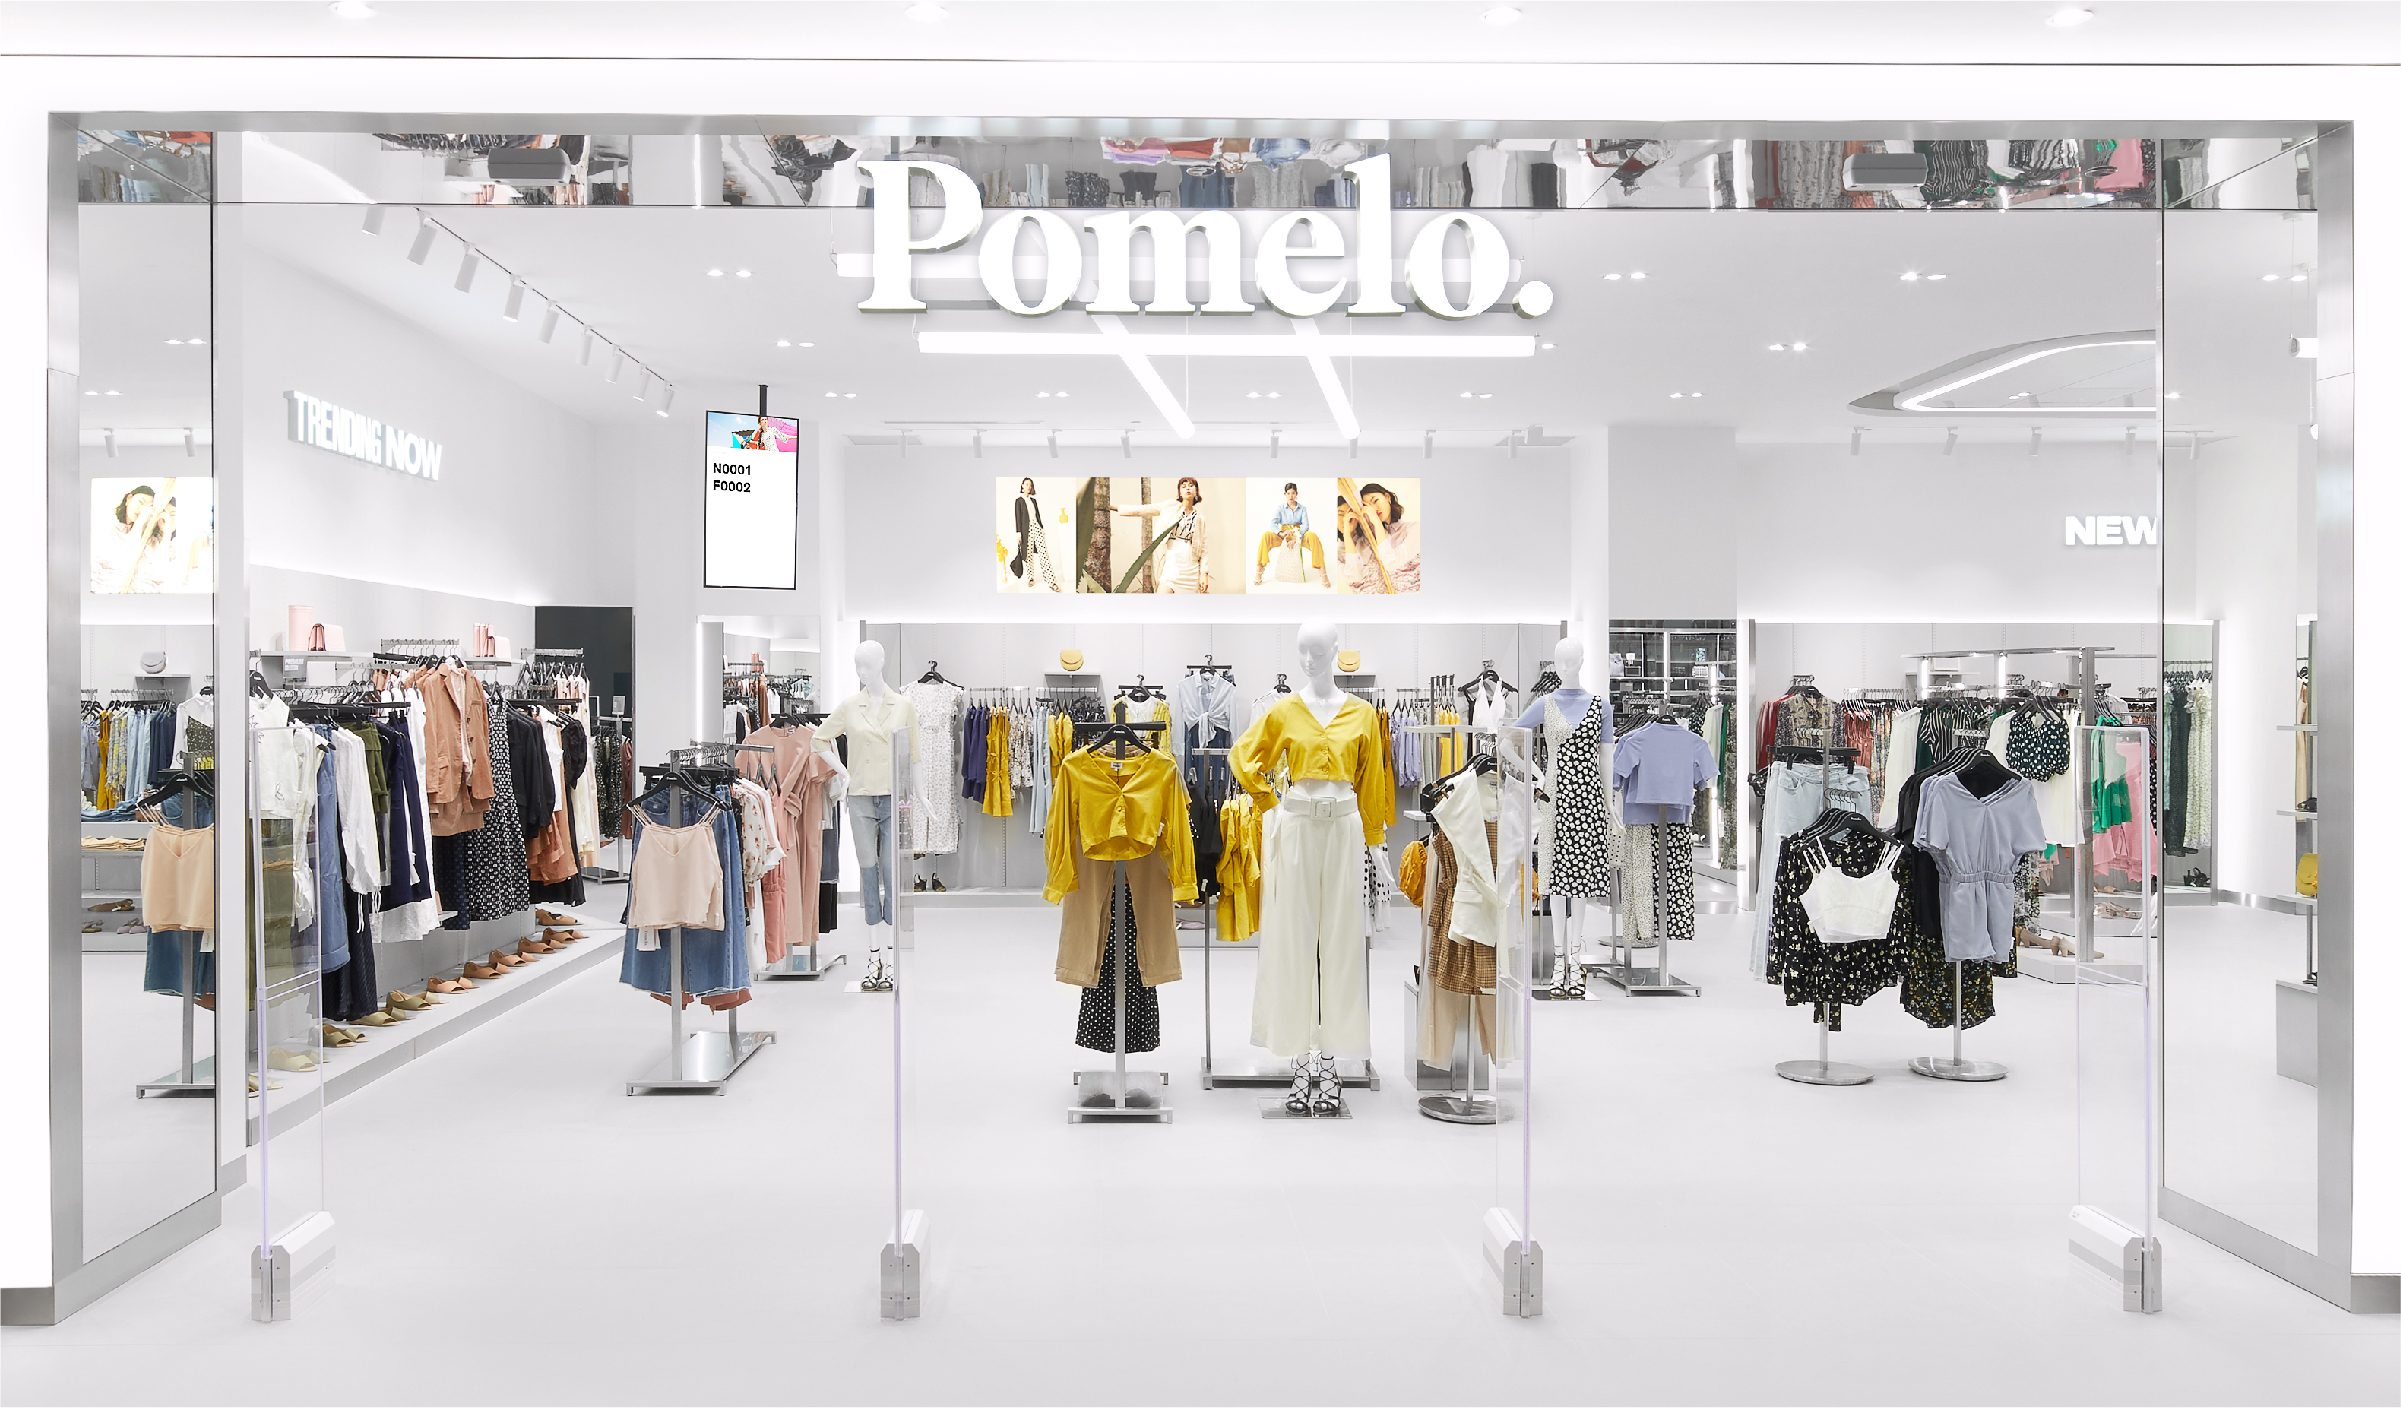 Thai fashion brand Pomelo's losses rose, revenue declined in FY2021